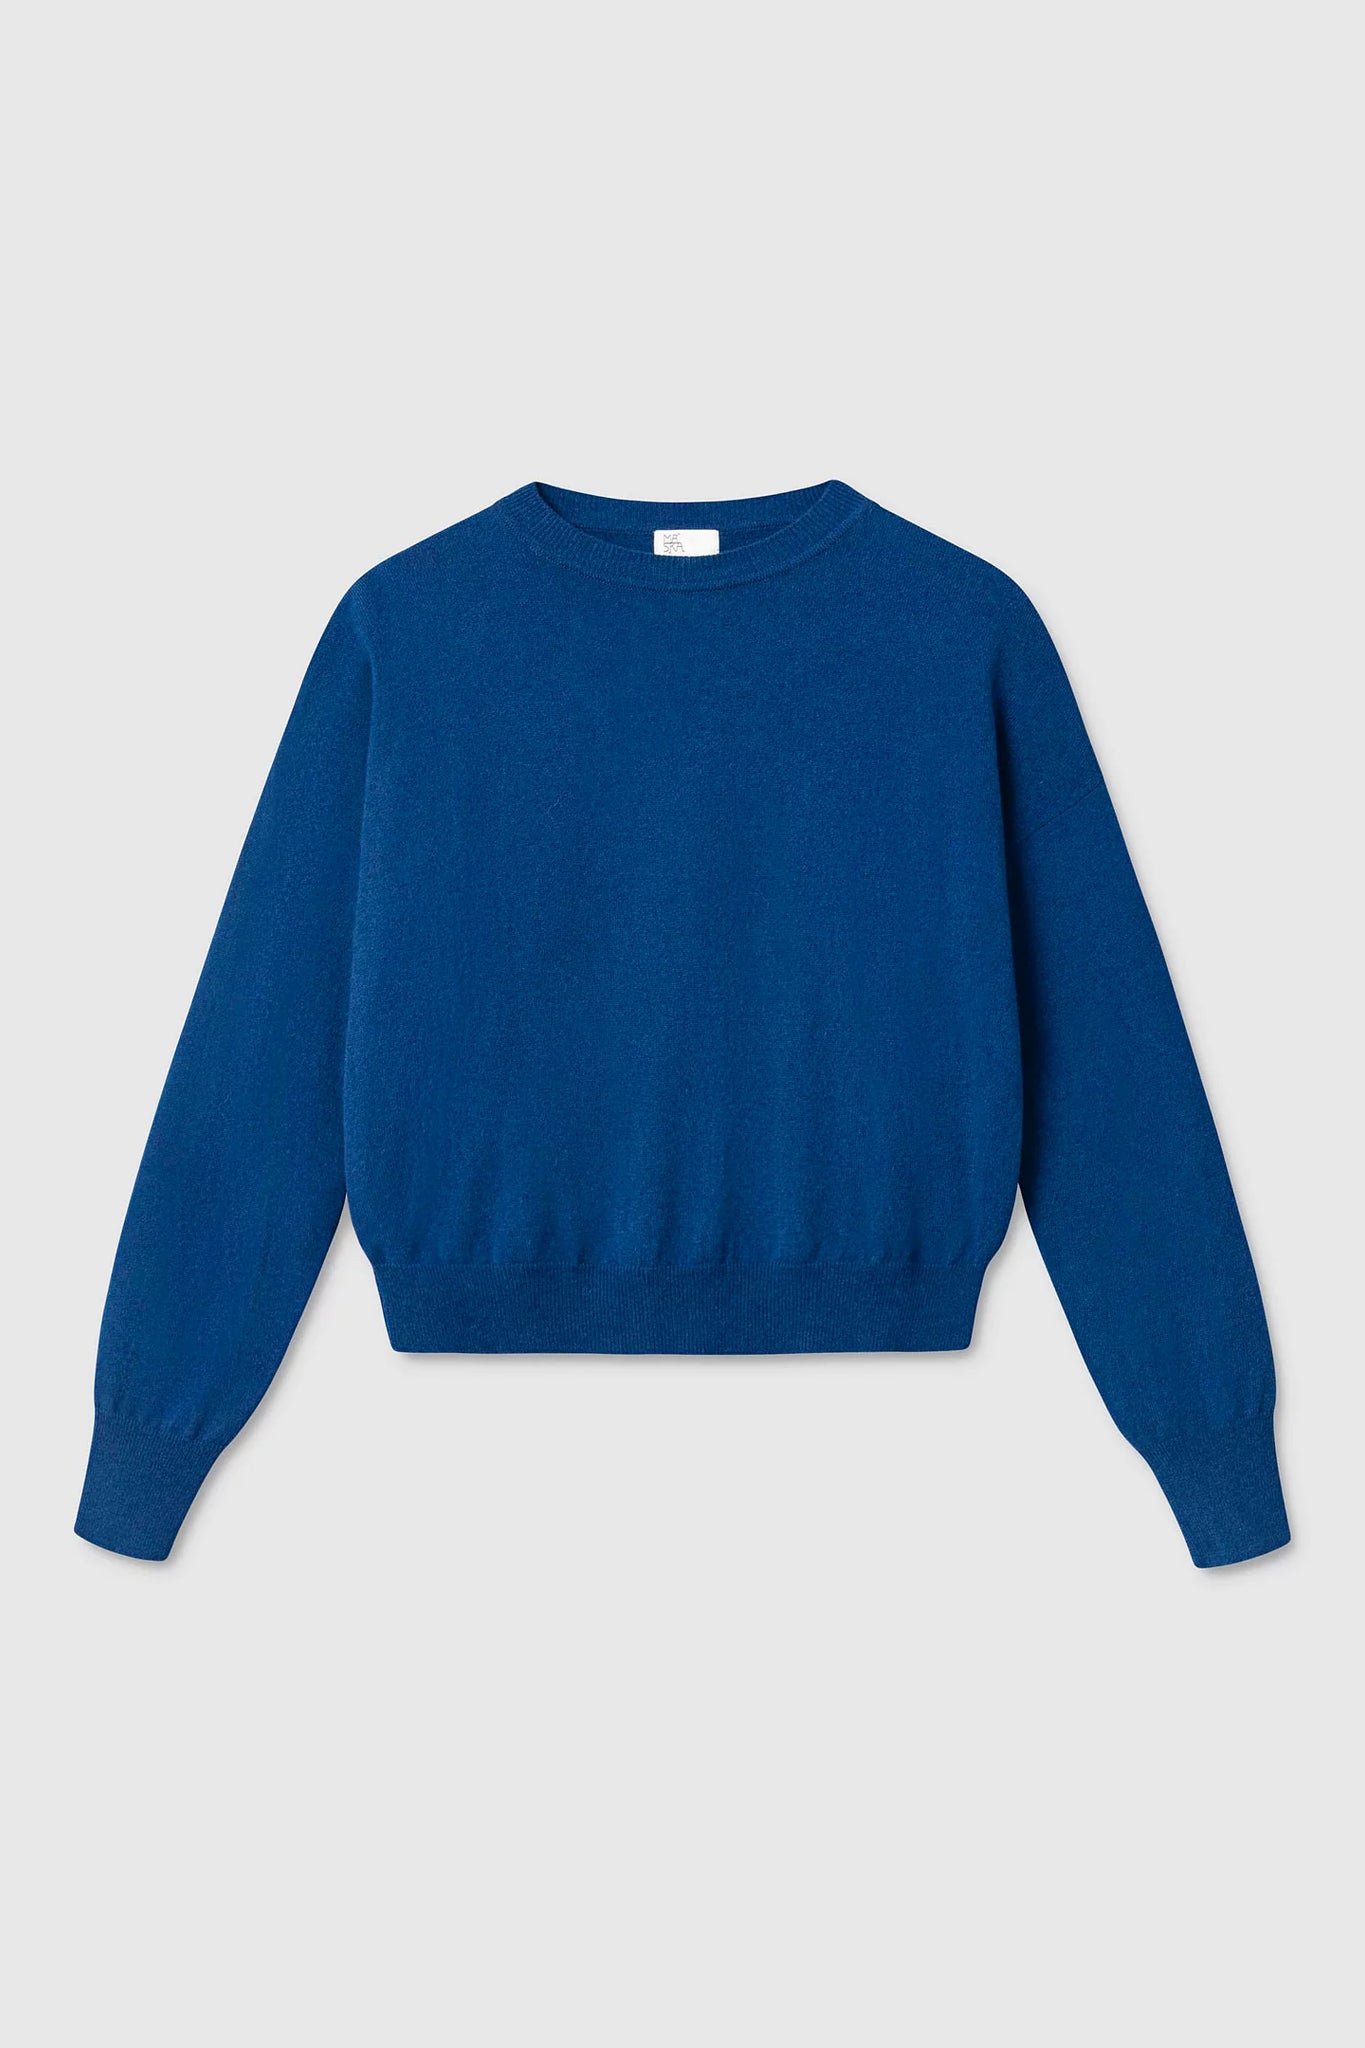 Ior cashmere wool sweater – Lazuli blue